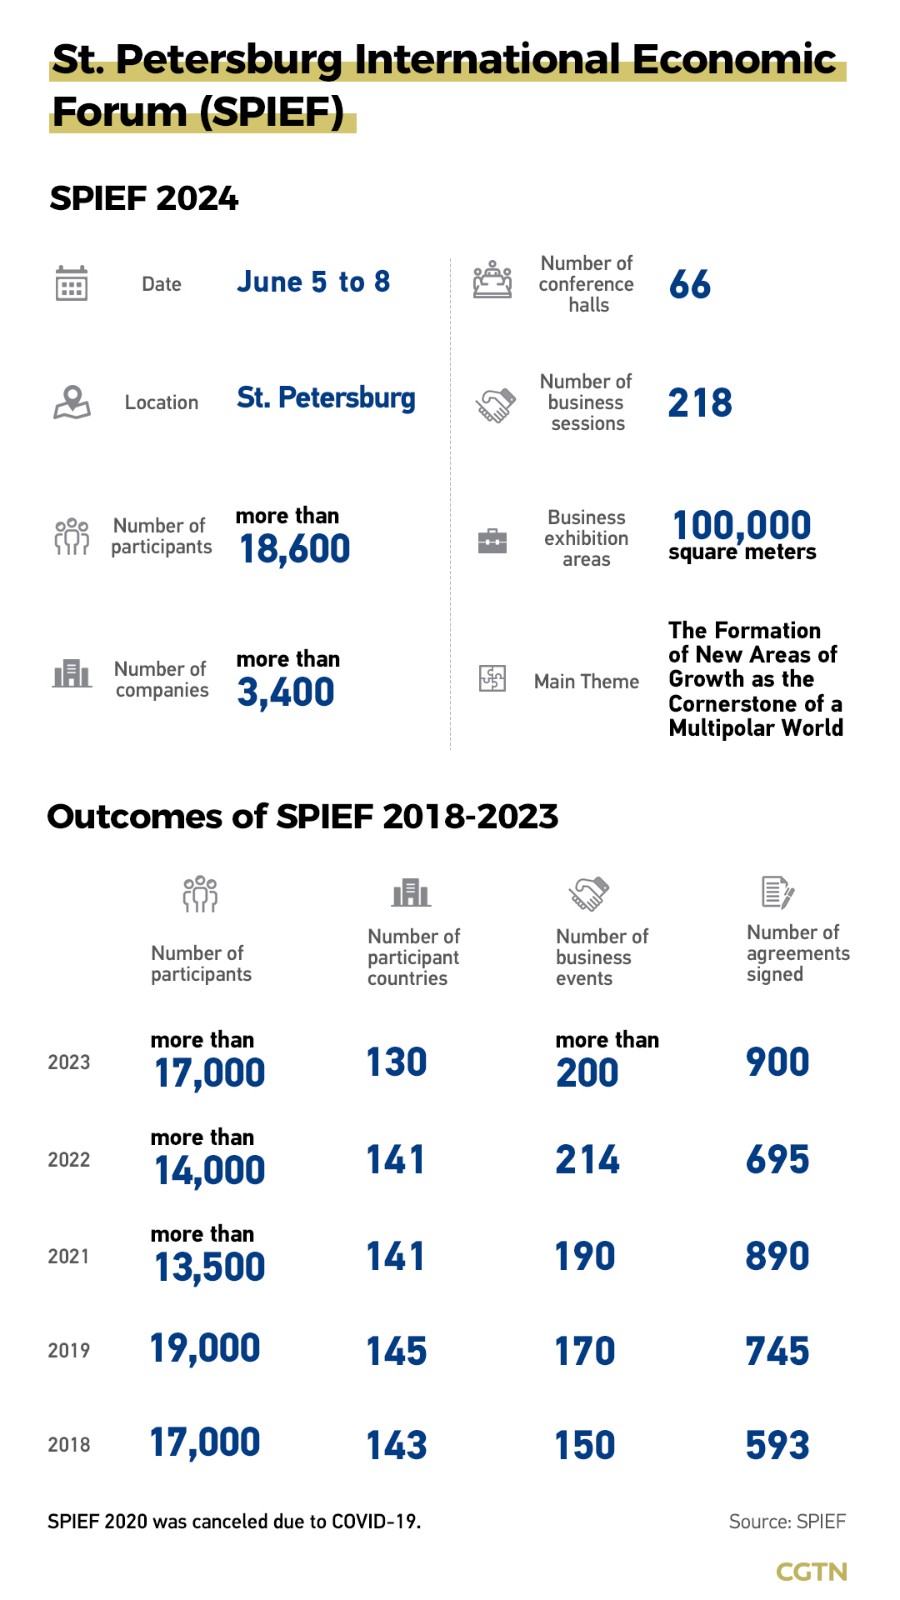 Basic facts about St. Petersburg International Economic Forum